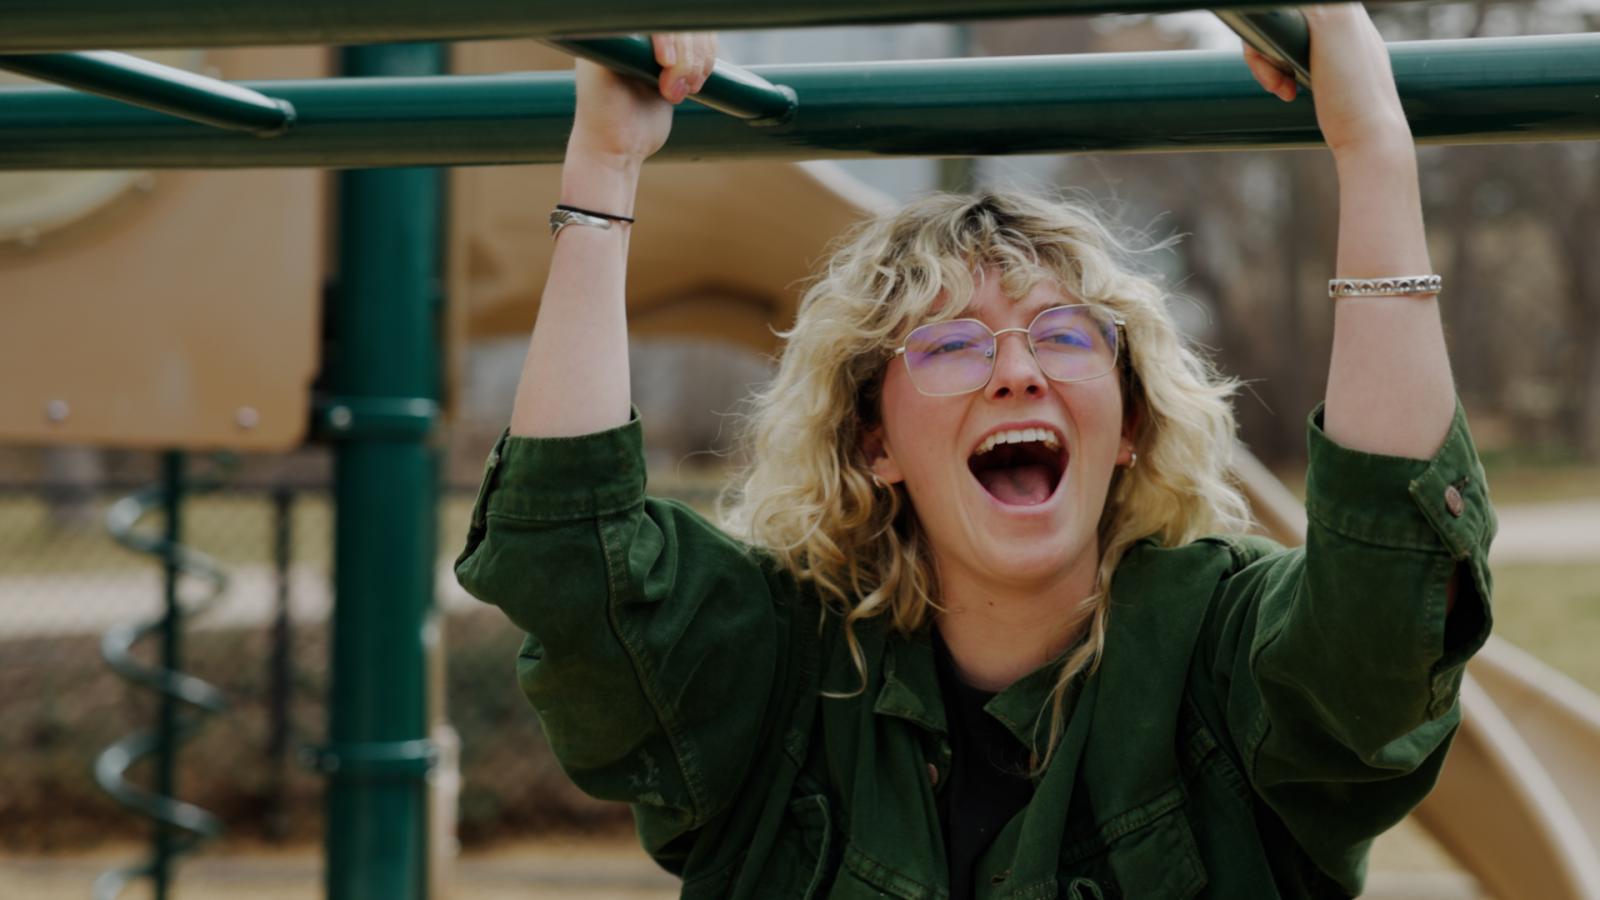 Woman having fun at a playground